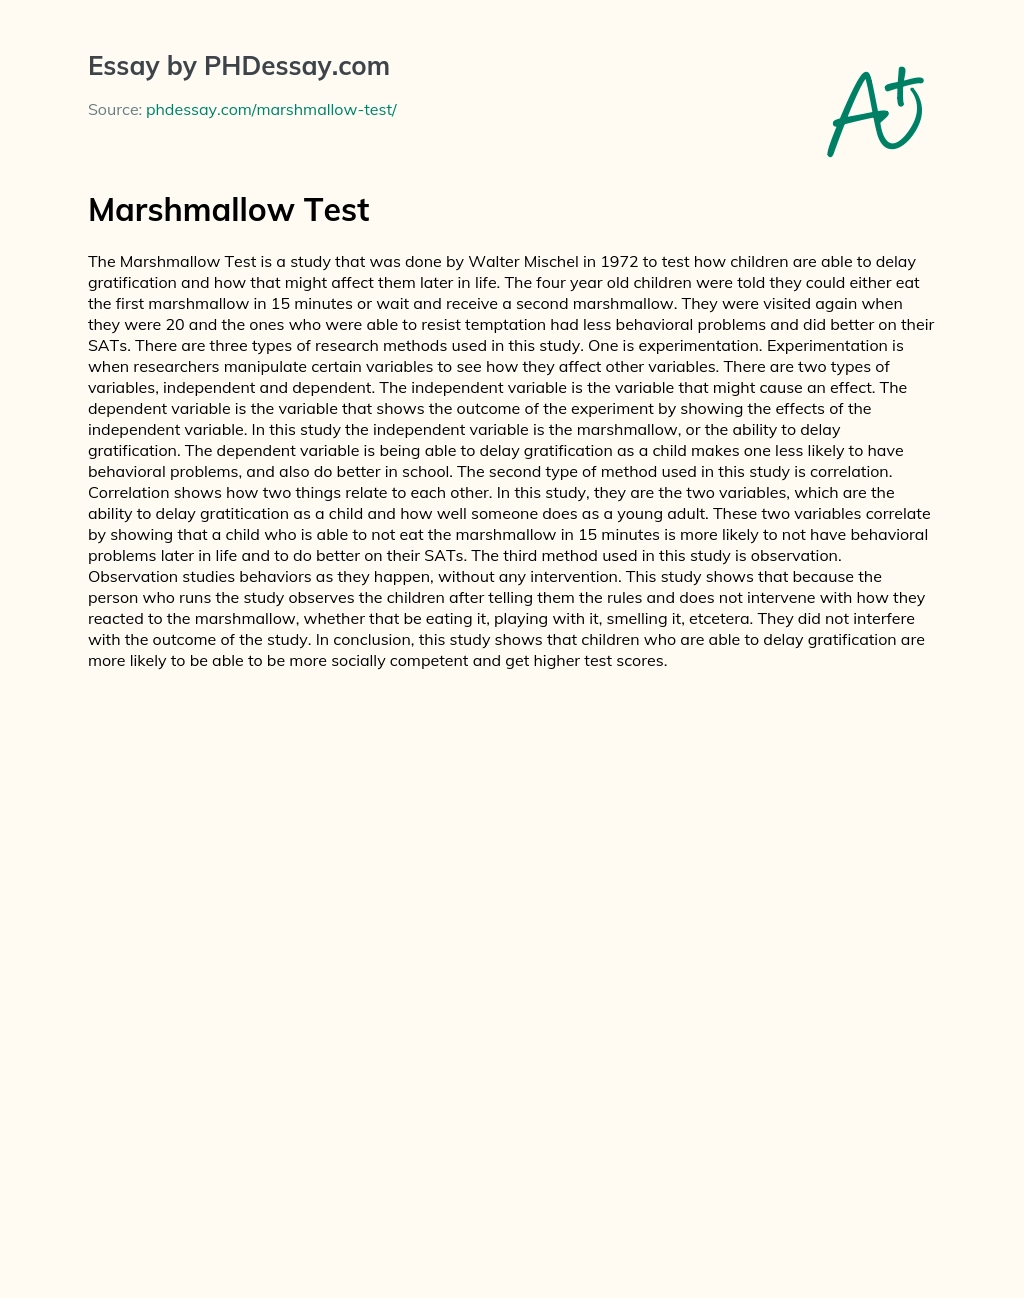 Marshmallow Test essay